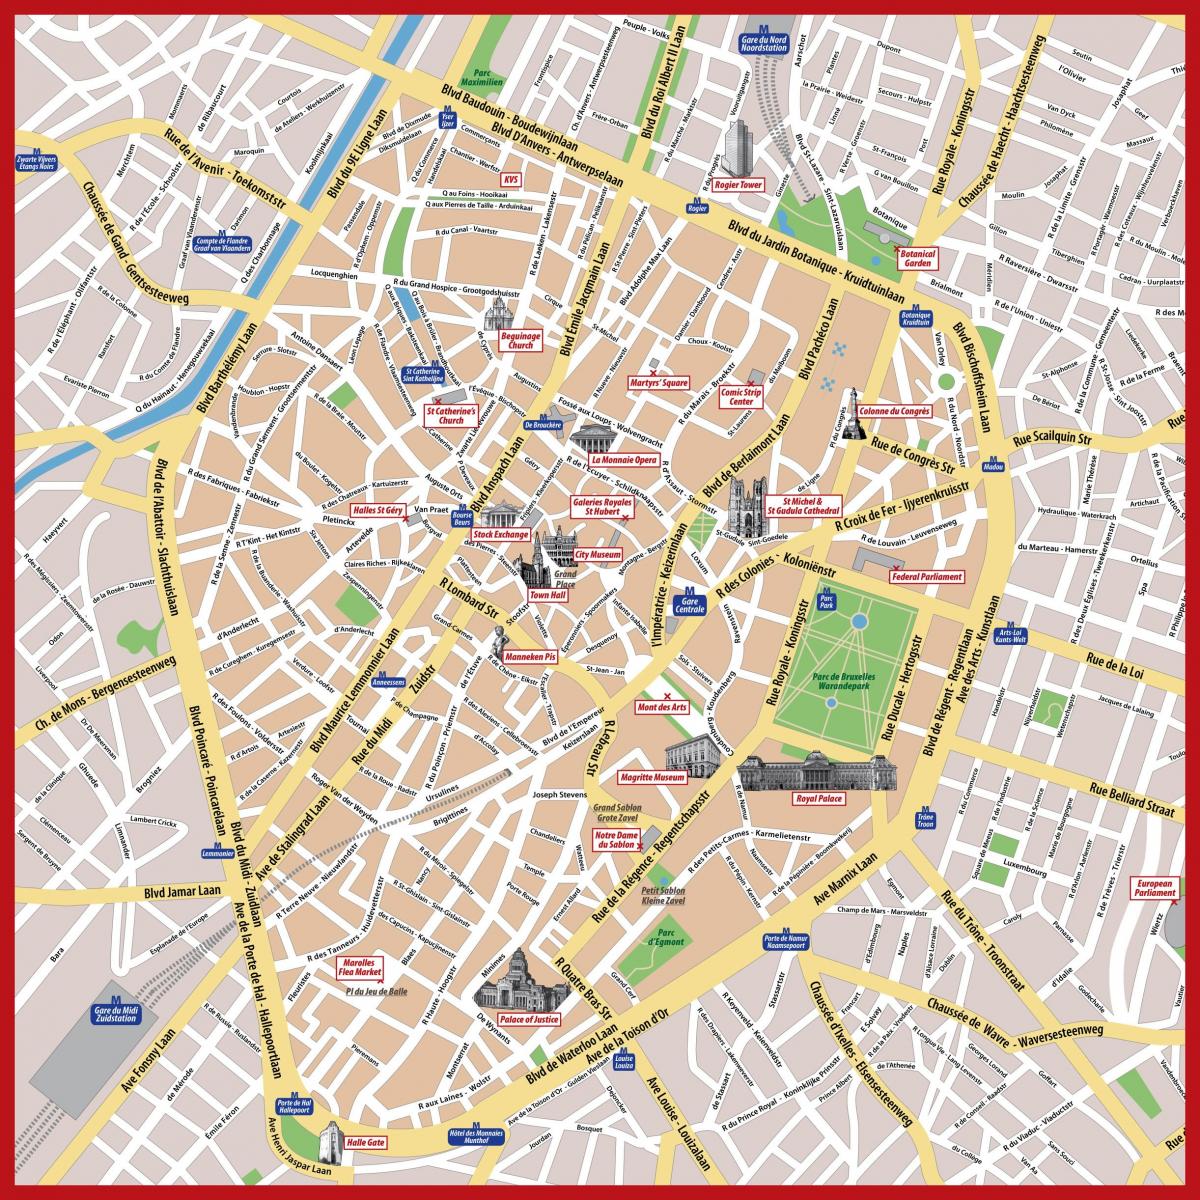 Brussels city map pdf